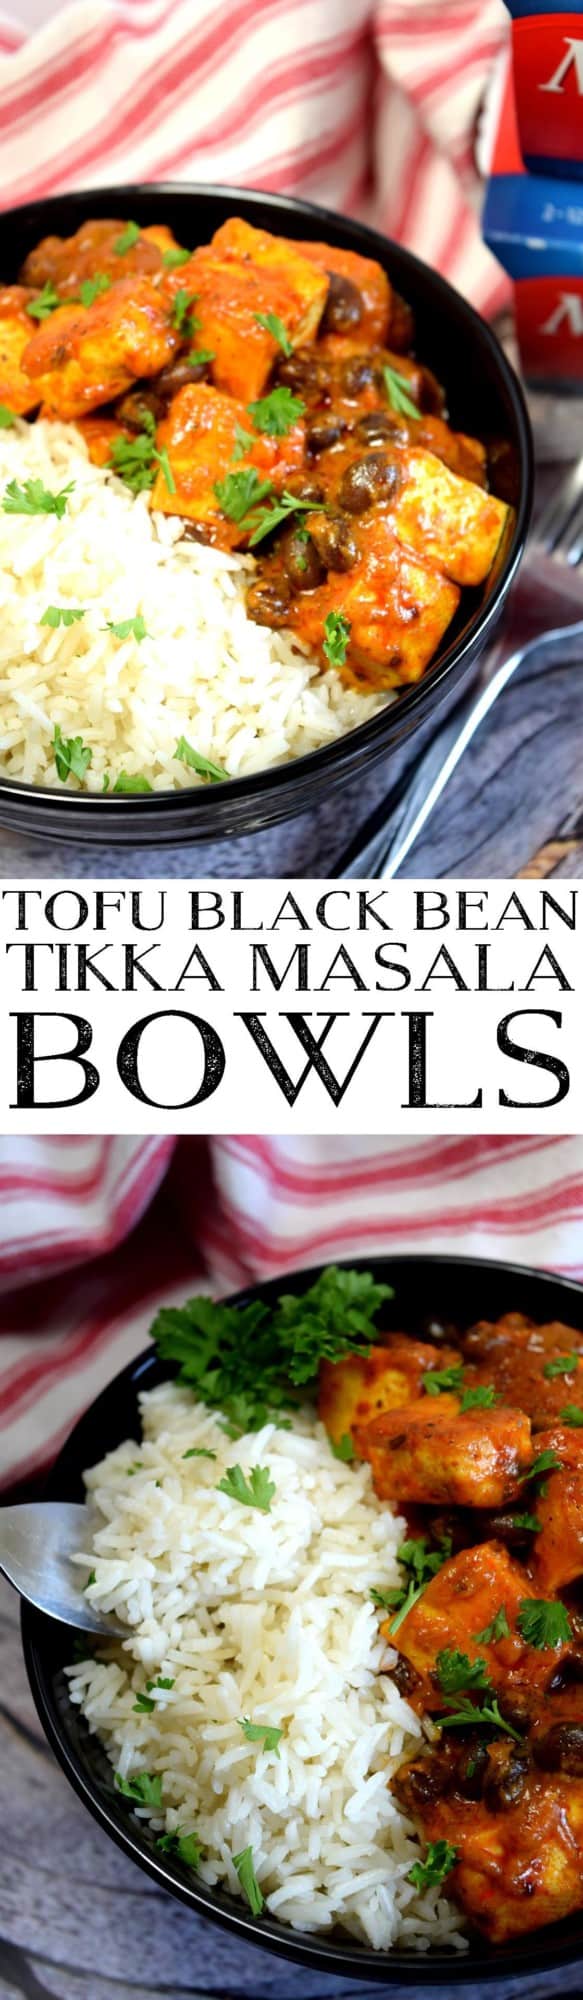 Tofu Black Bean Tikka Masala Bowls